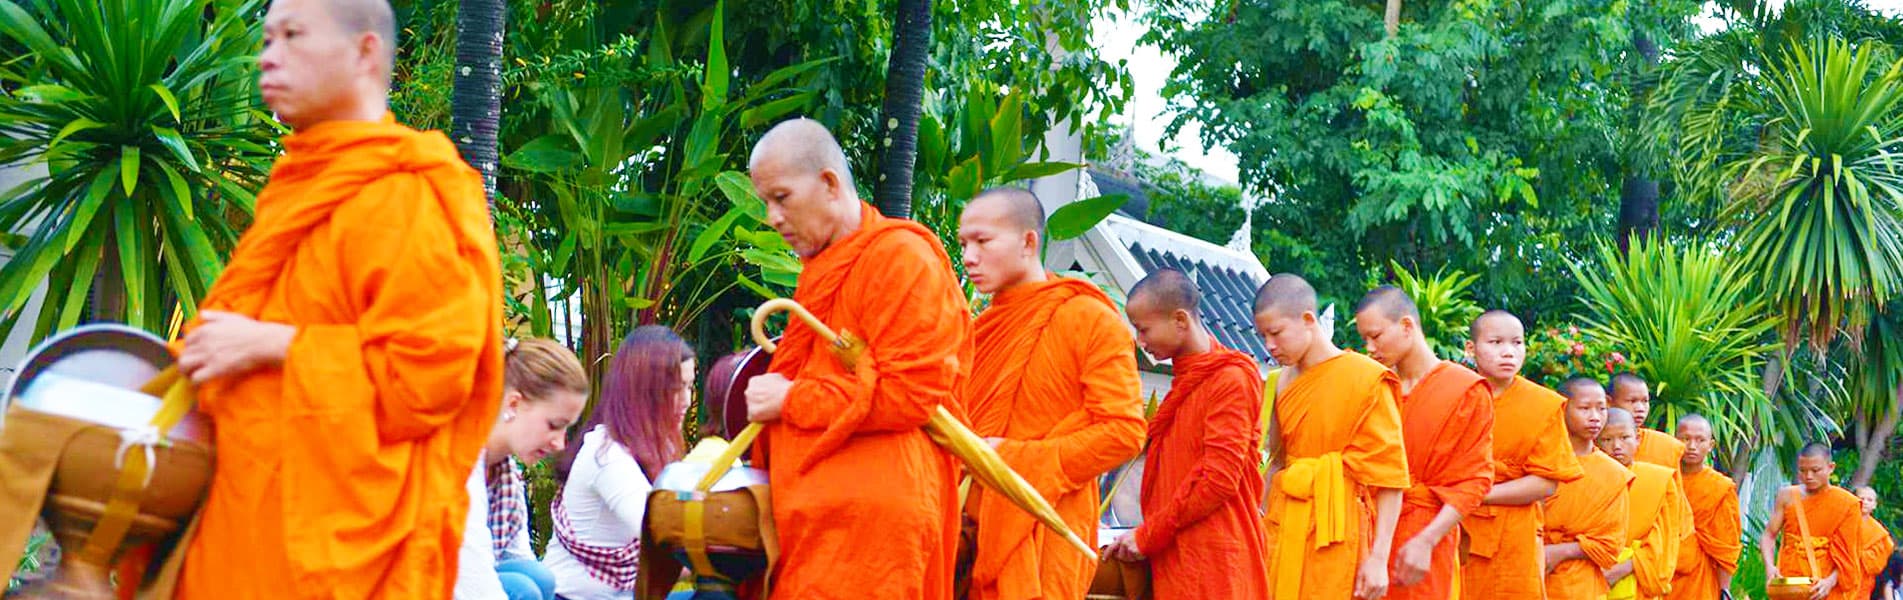 Alms giving ceremony, Laos